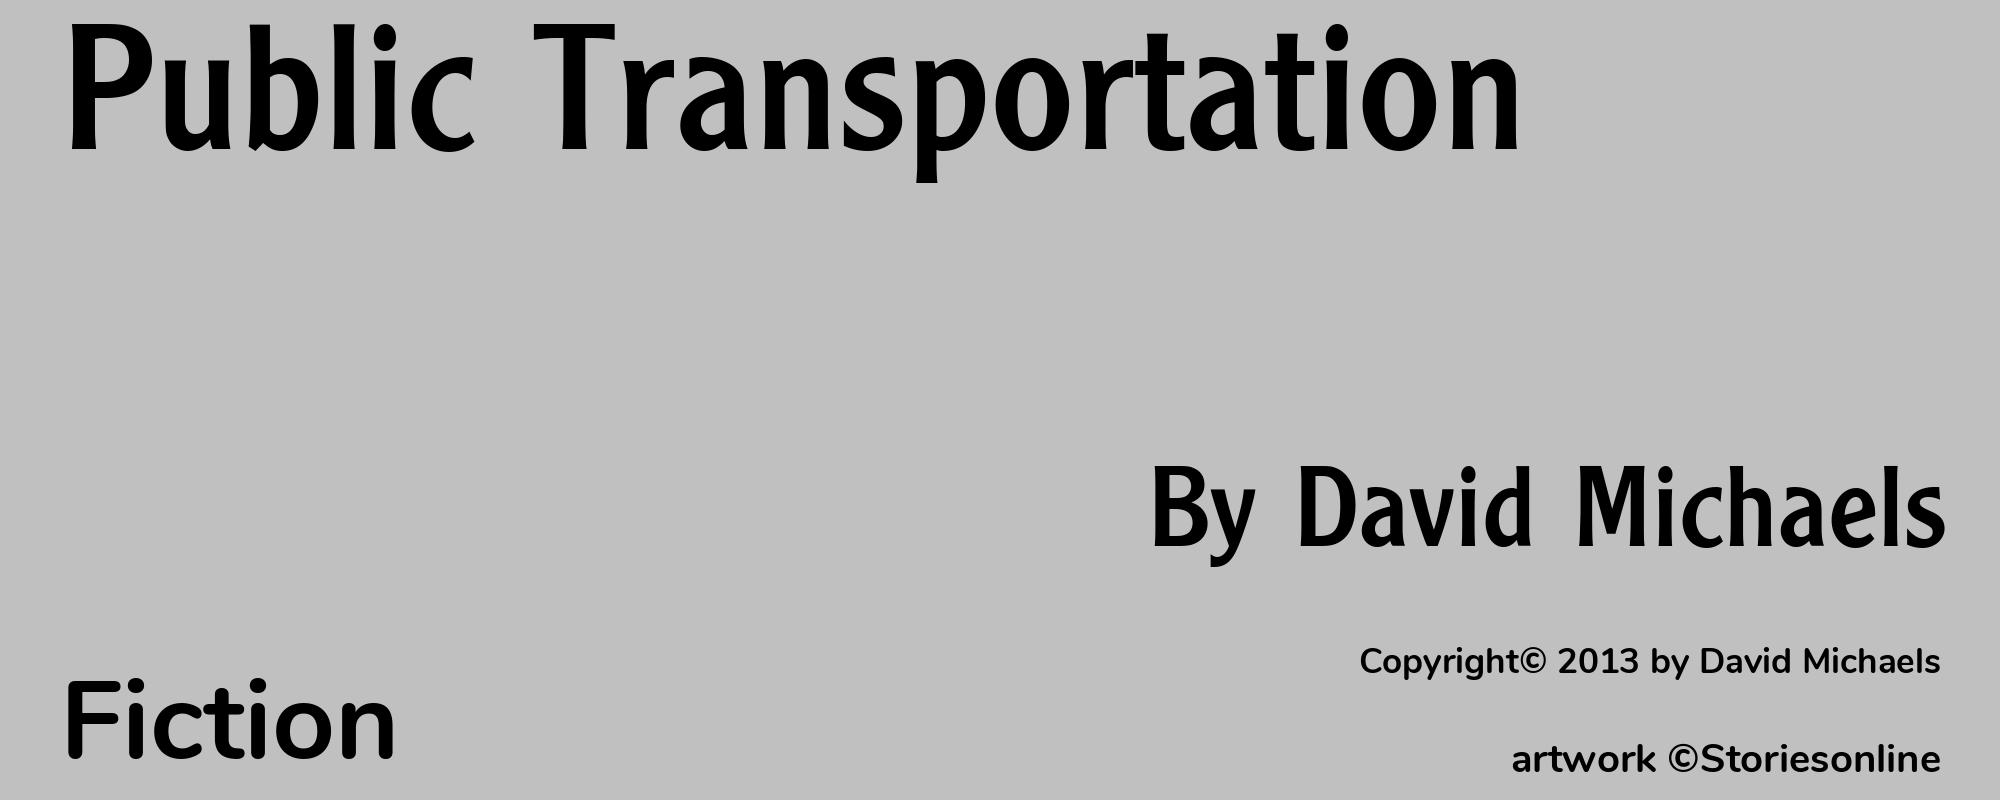 Public Transportation - Cover